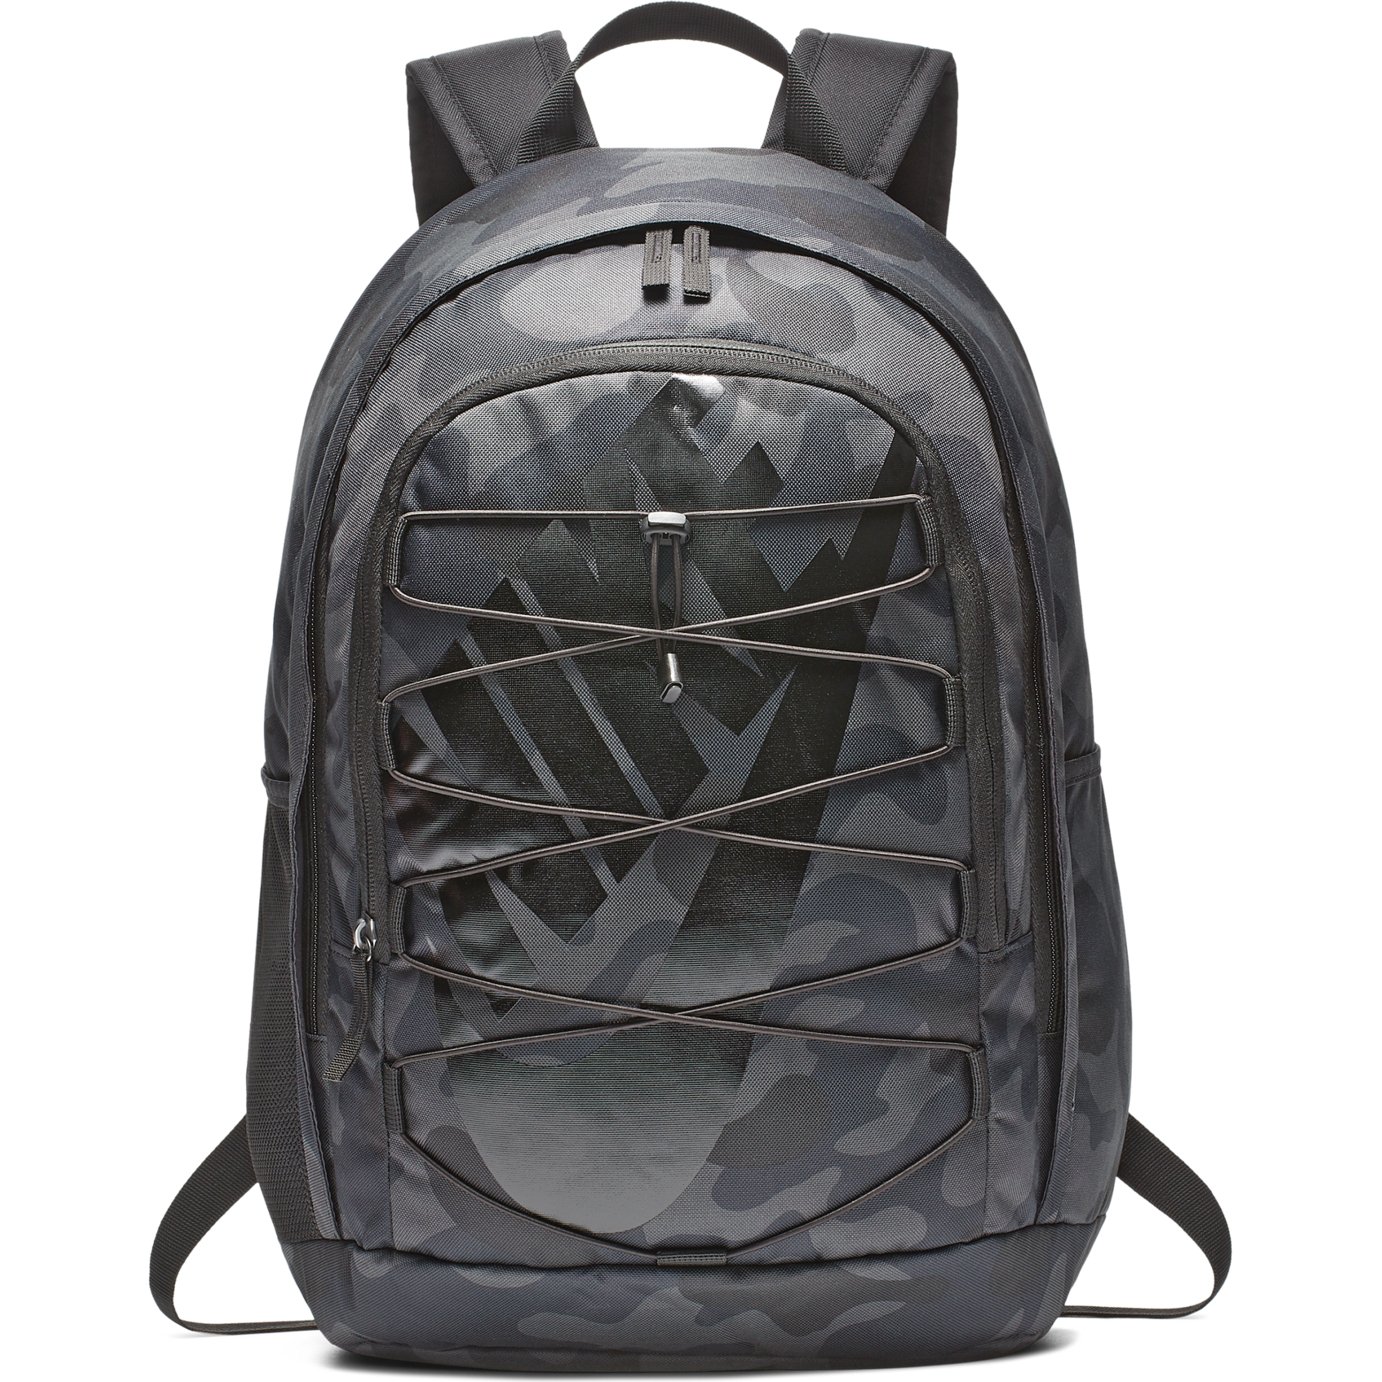 Nike Hayward 2.0 36L Backpack - Black Camouflage